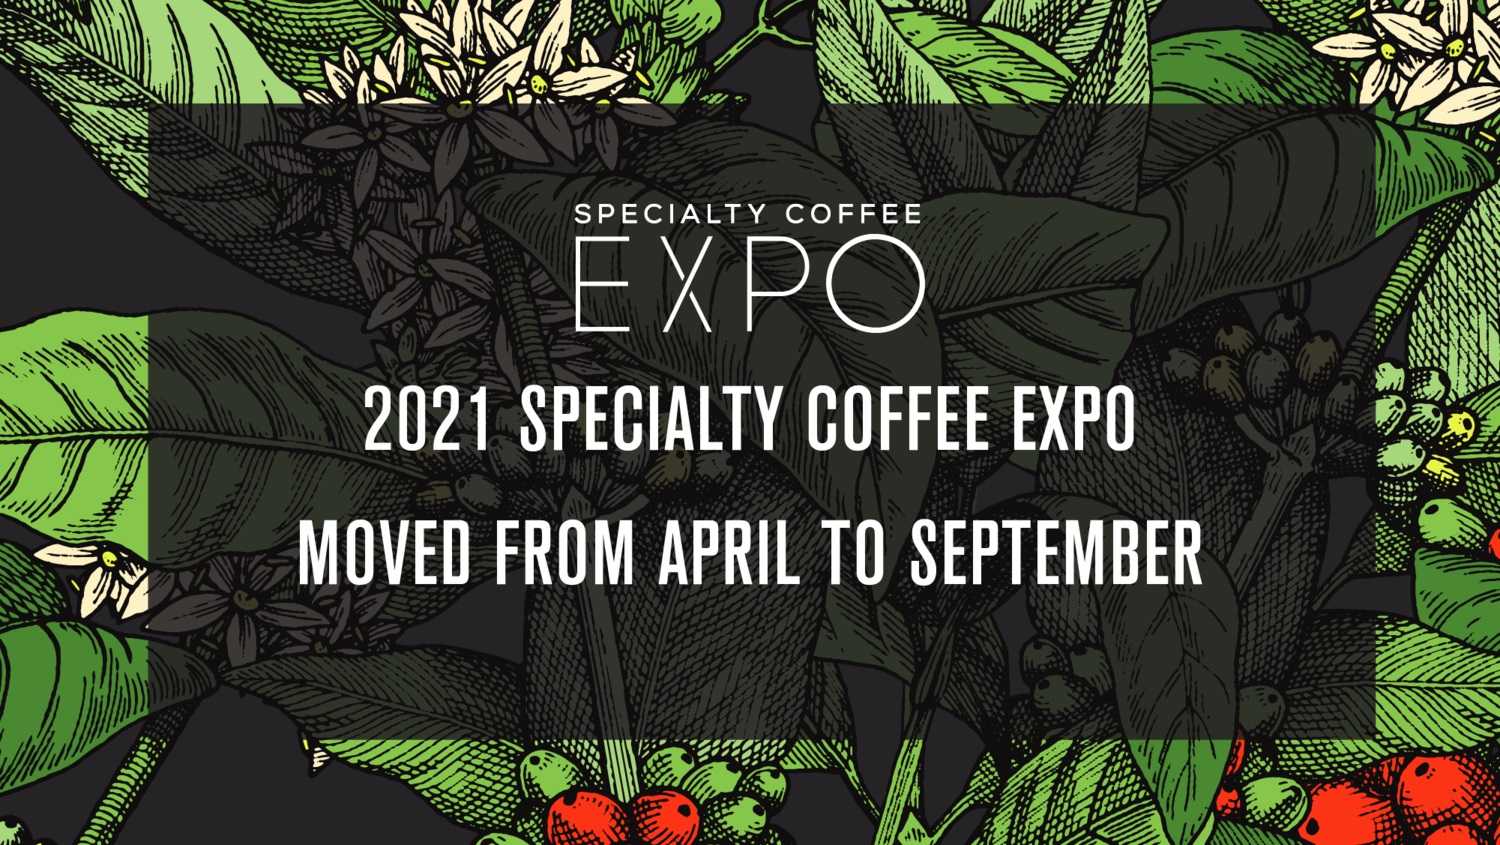 Specialty Coffee Expo 2021 postponement